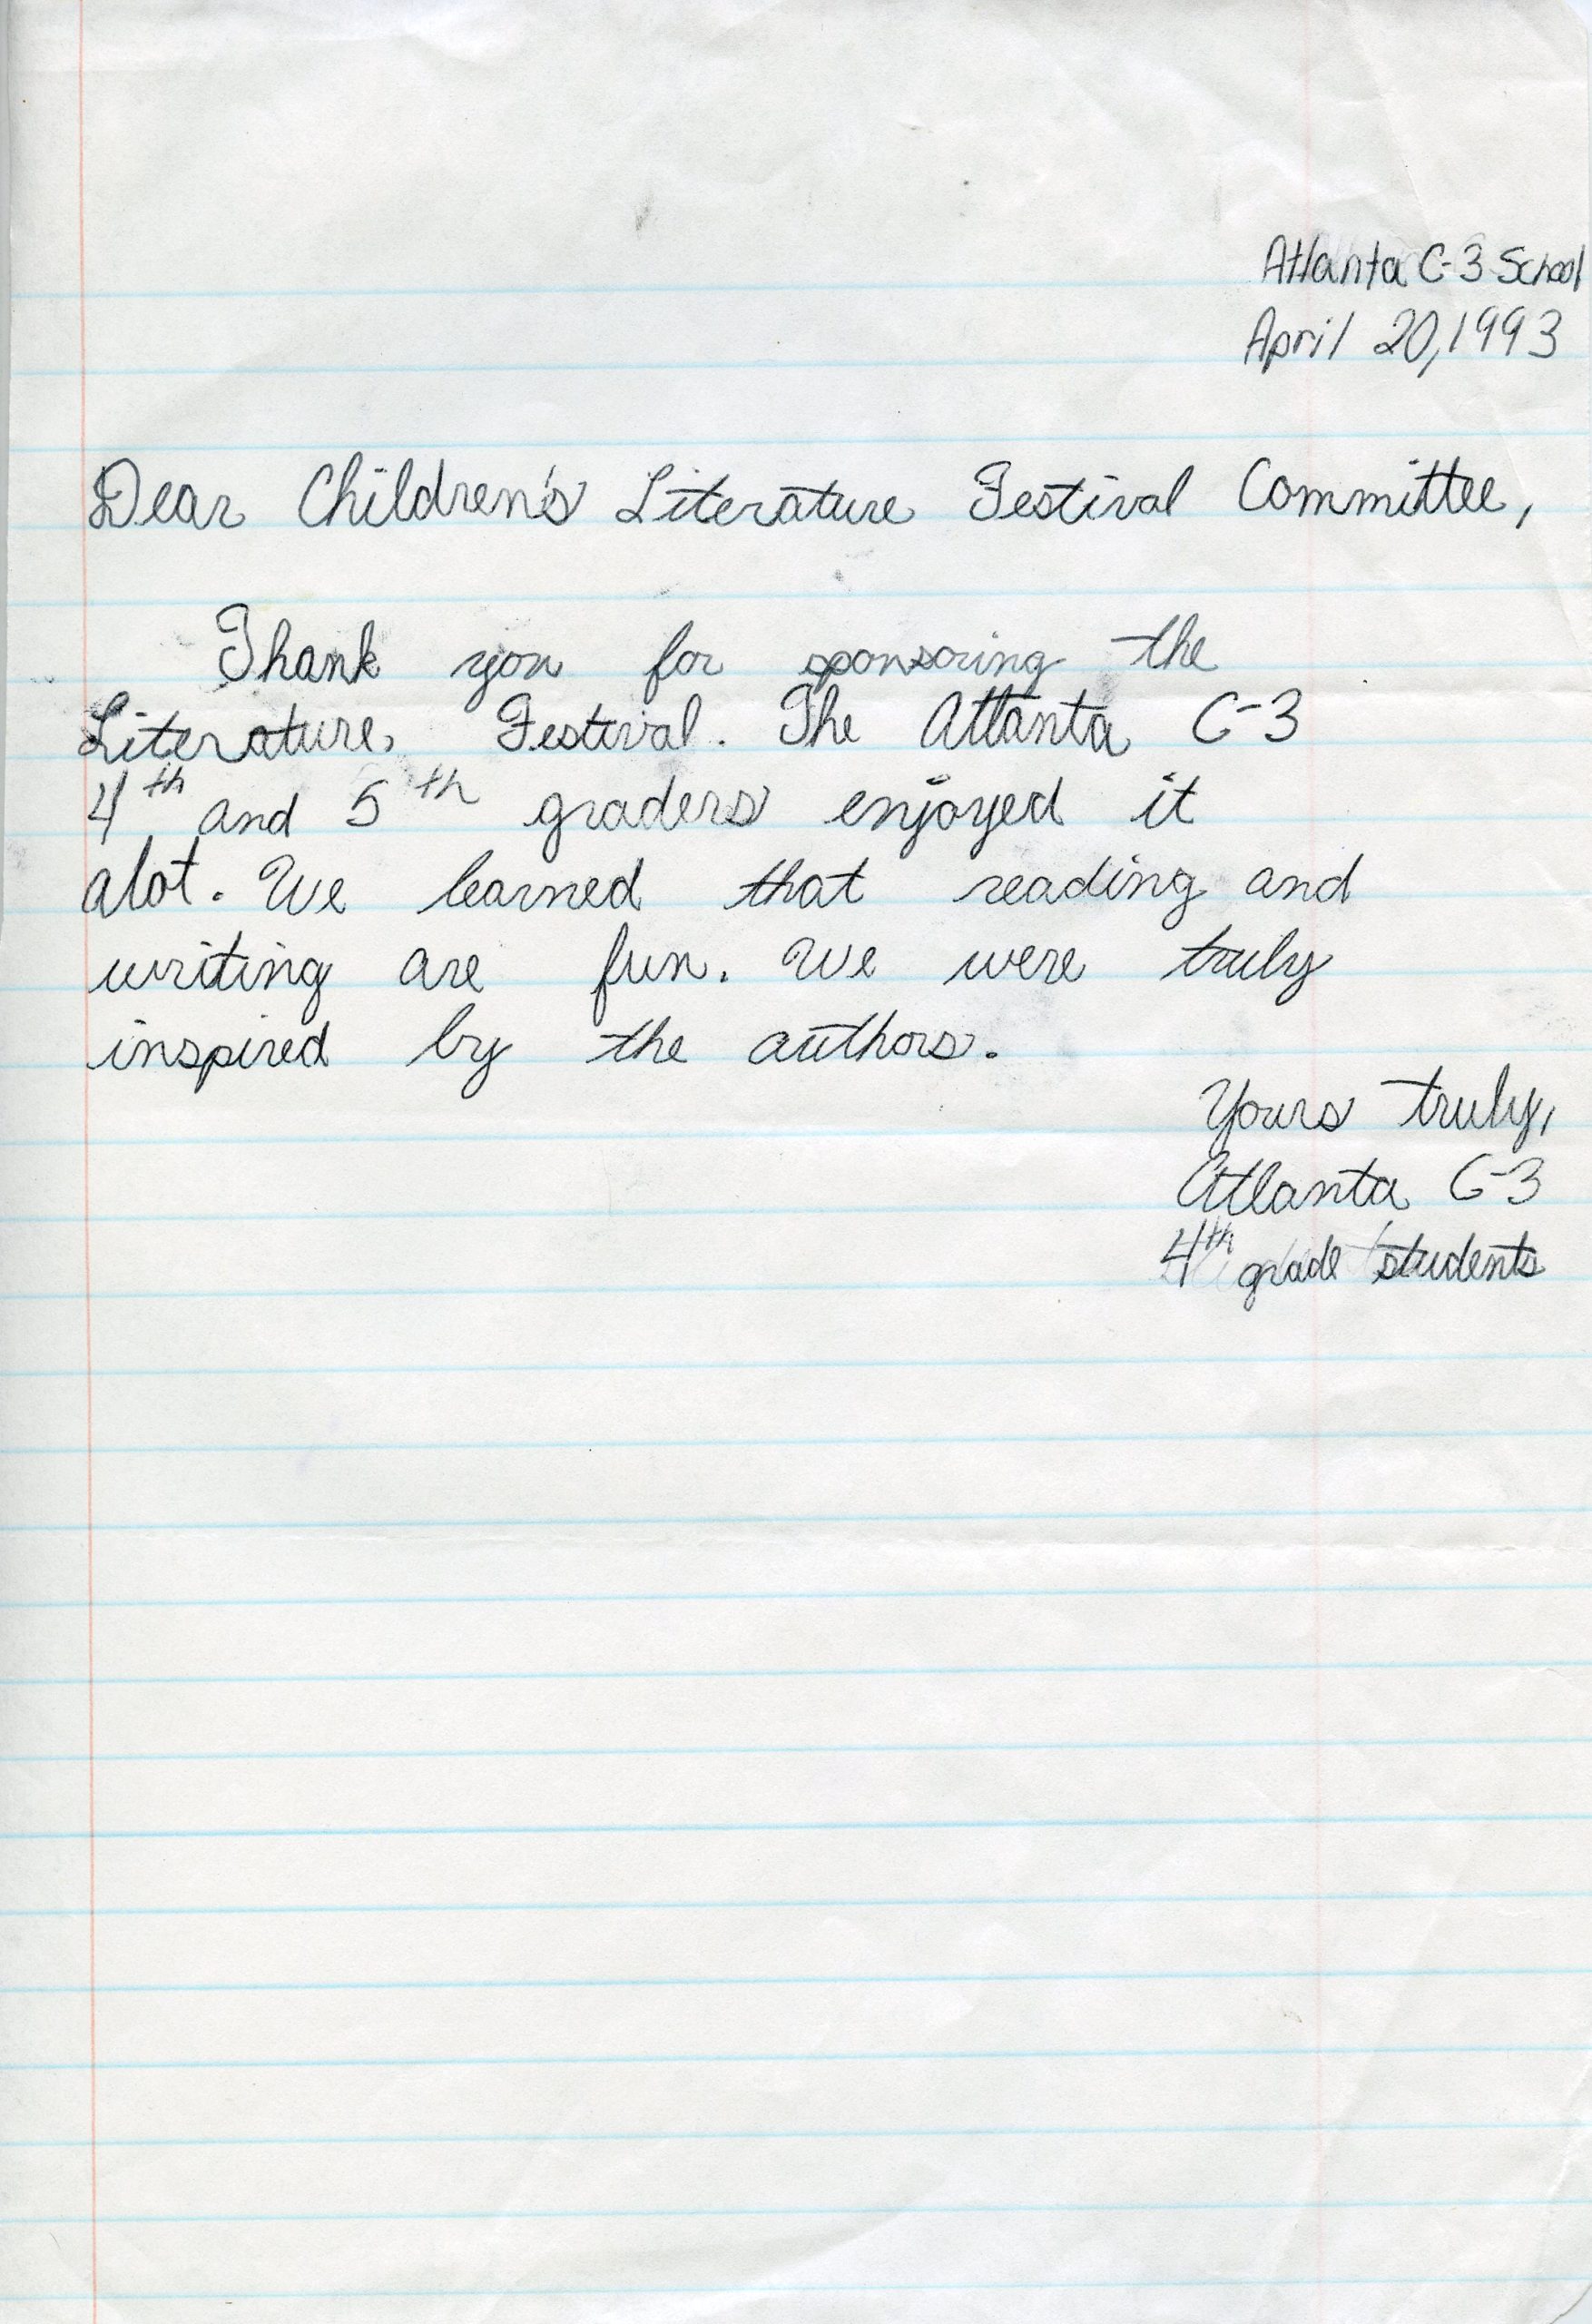 1993 handwritten thank-you letter from Atlanta class C-3